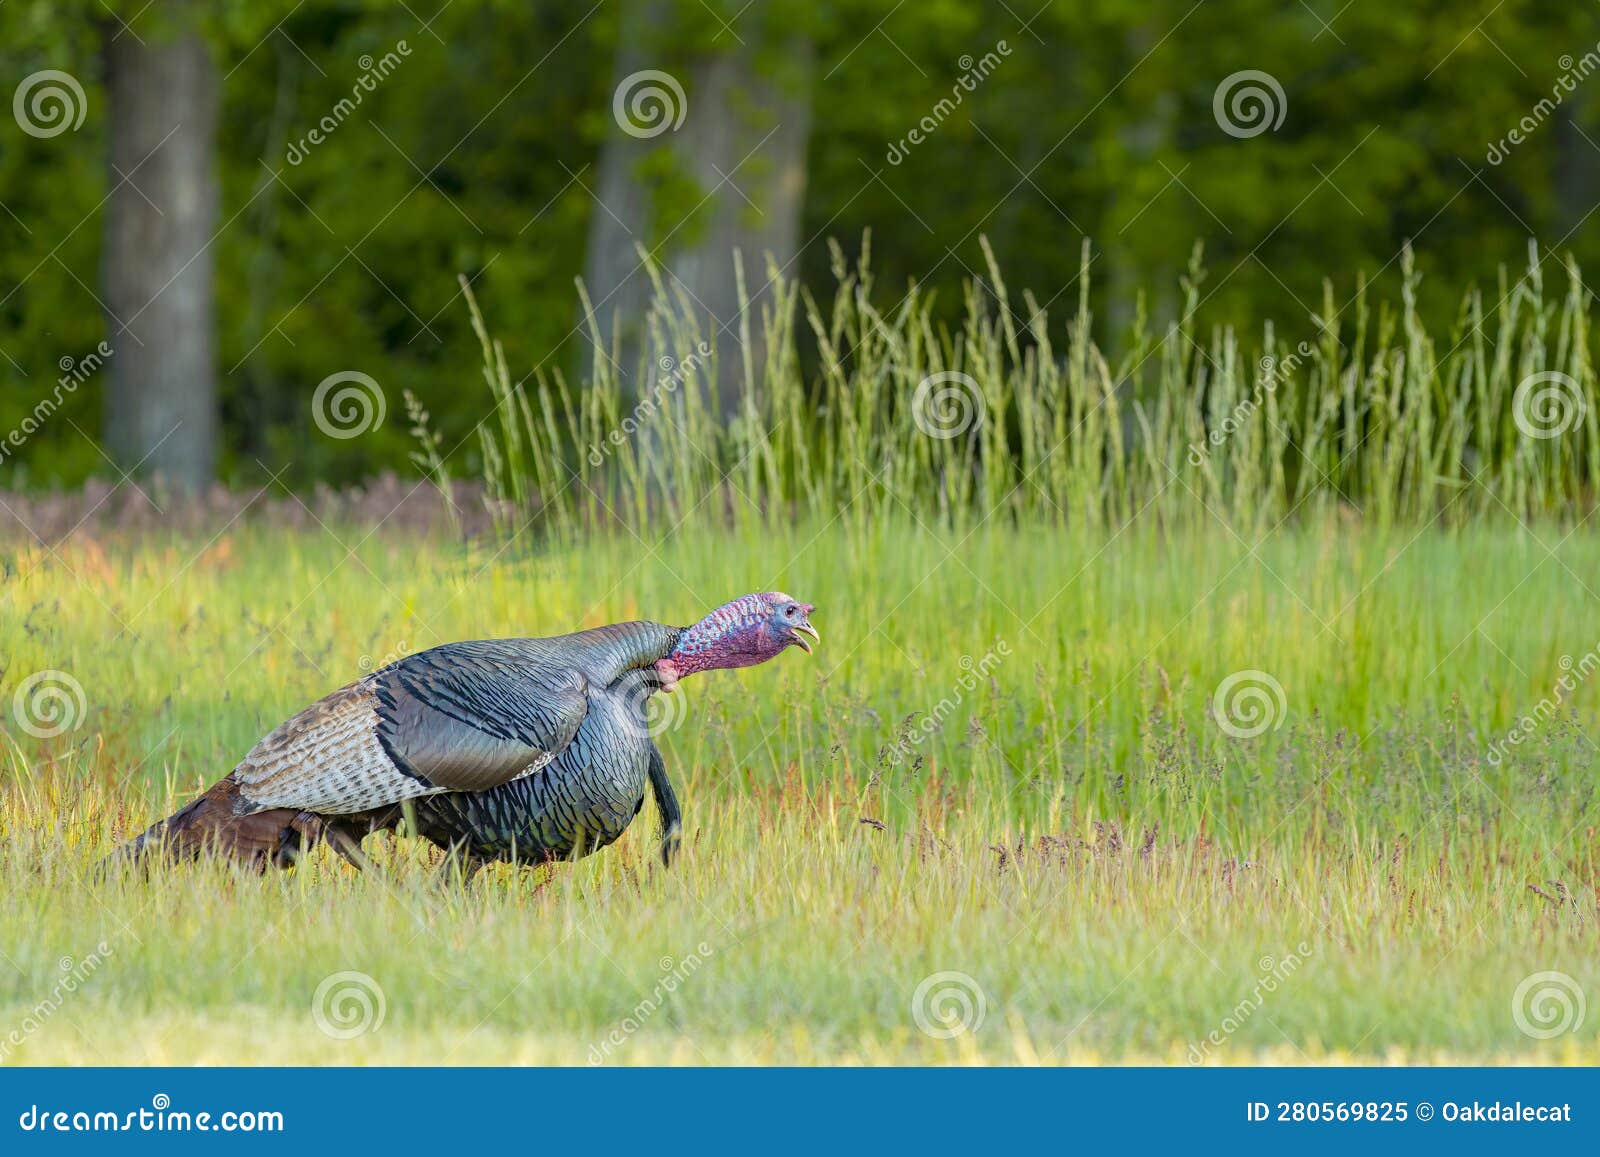 wild male turkey gobbling